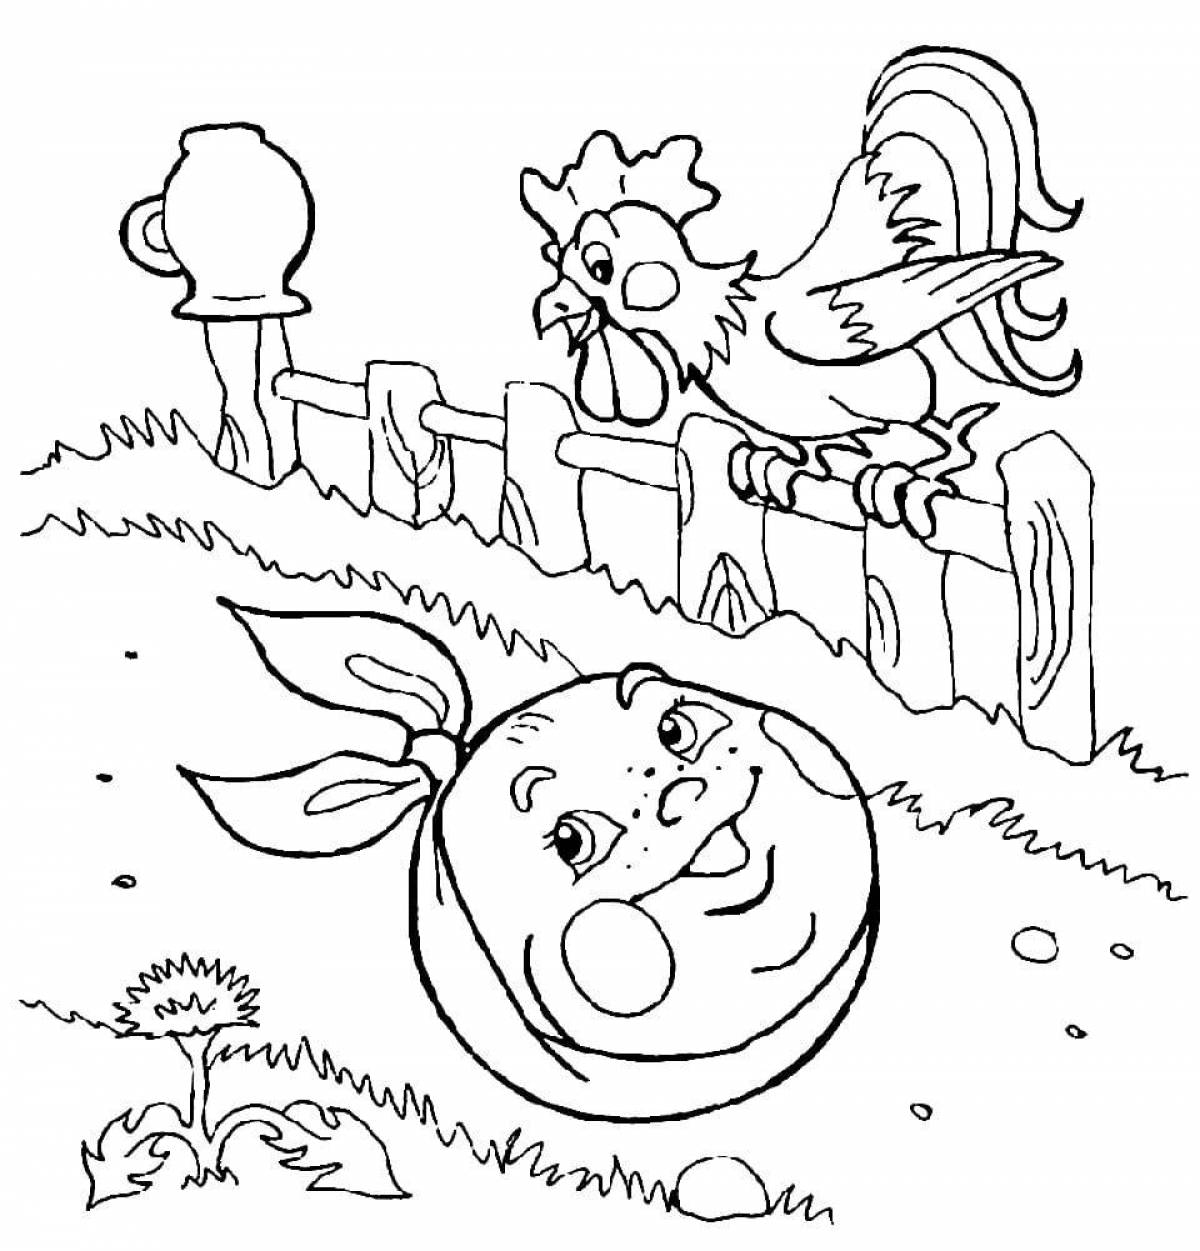 Creative kolobok coloring book for preschoolers